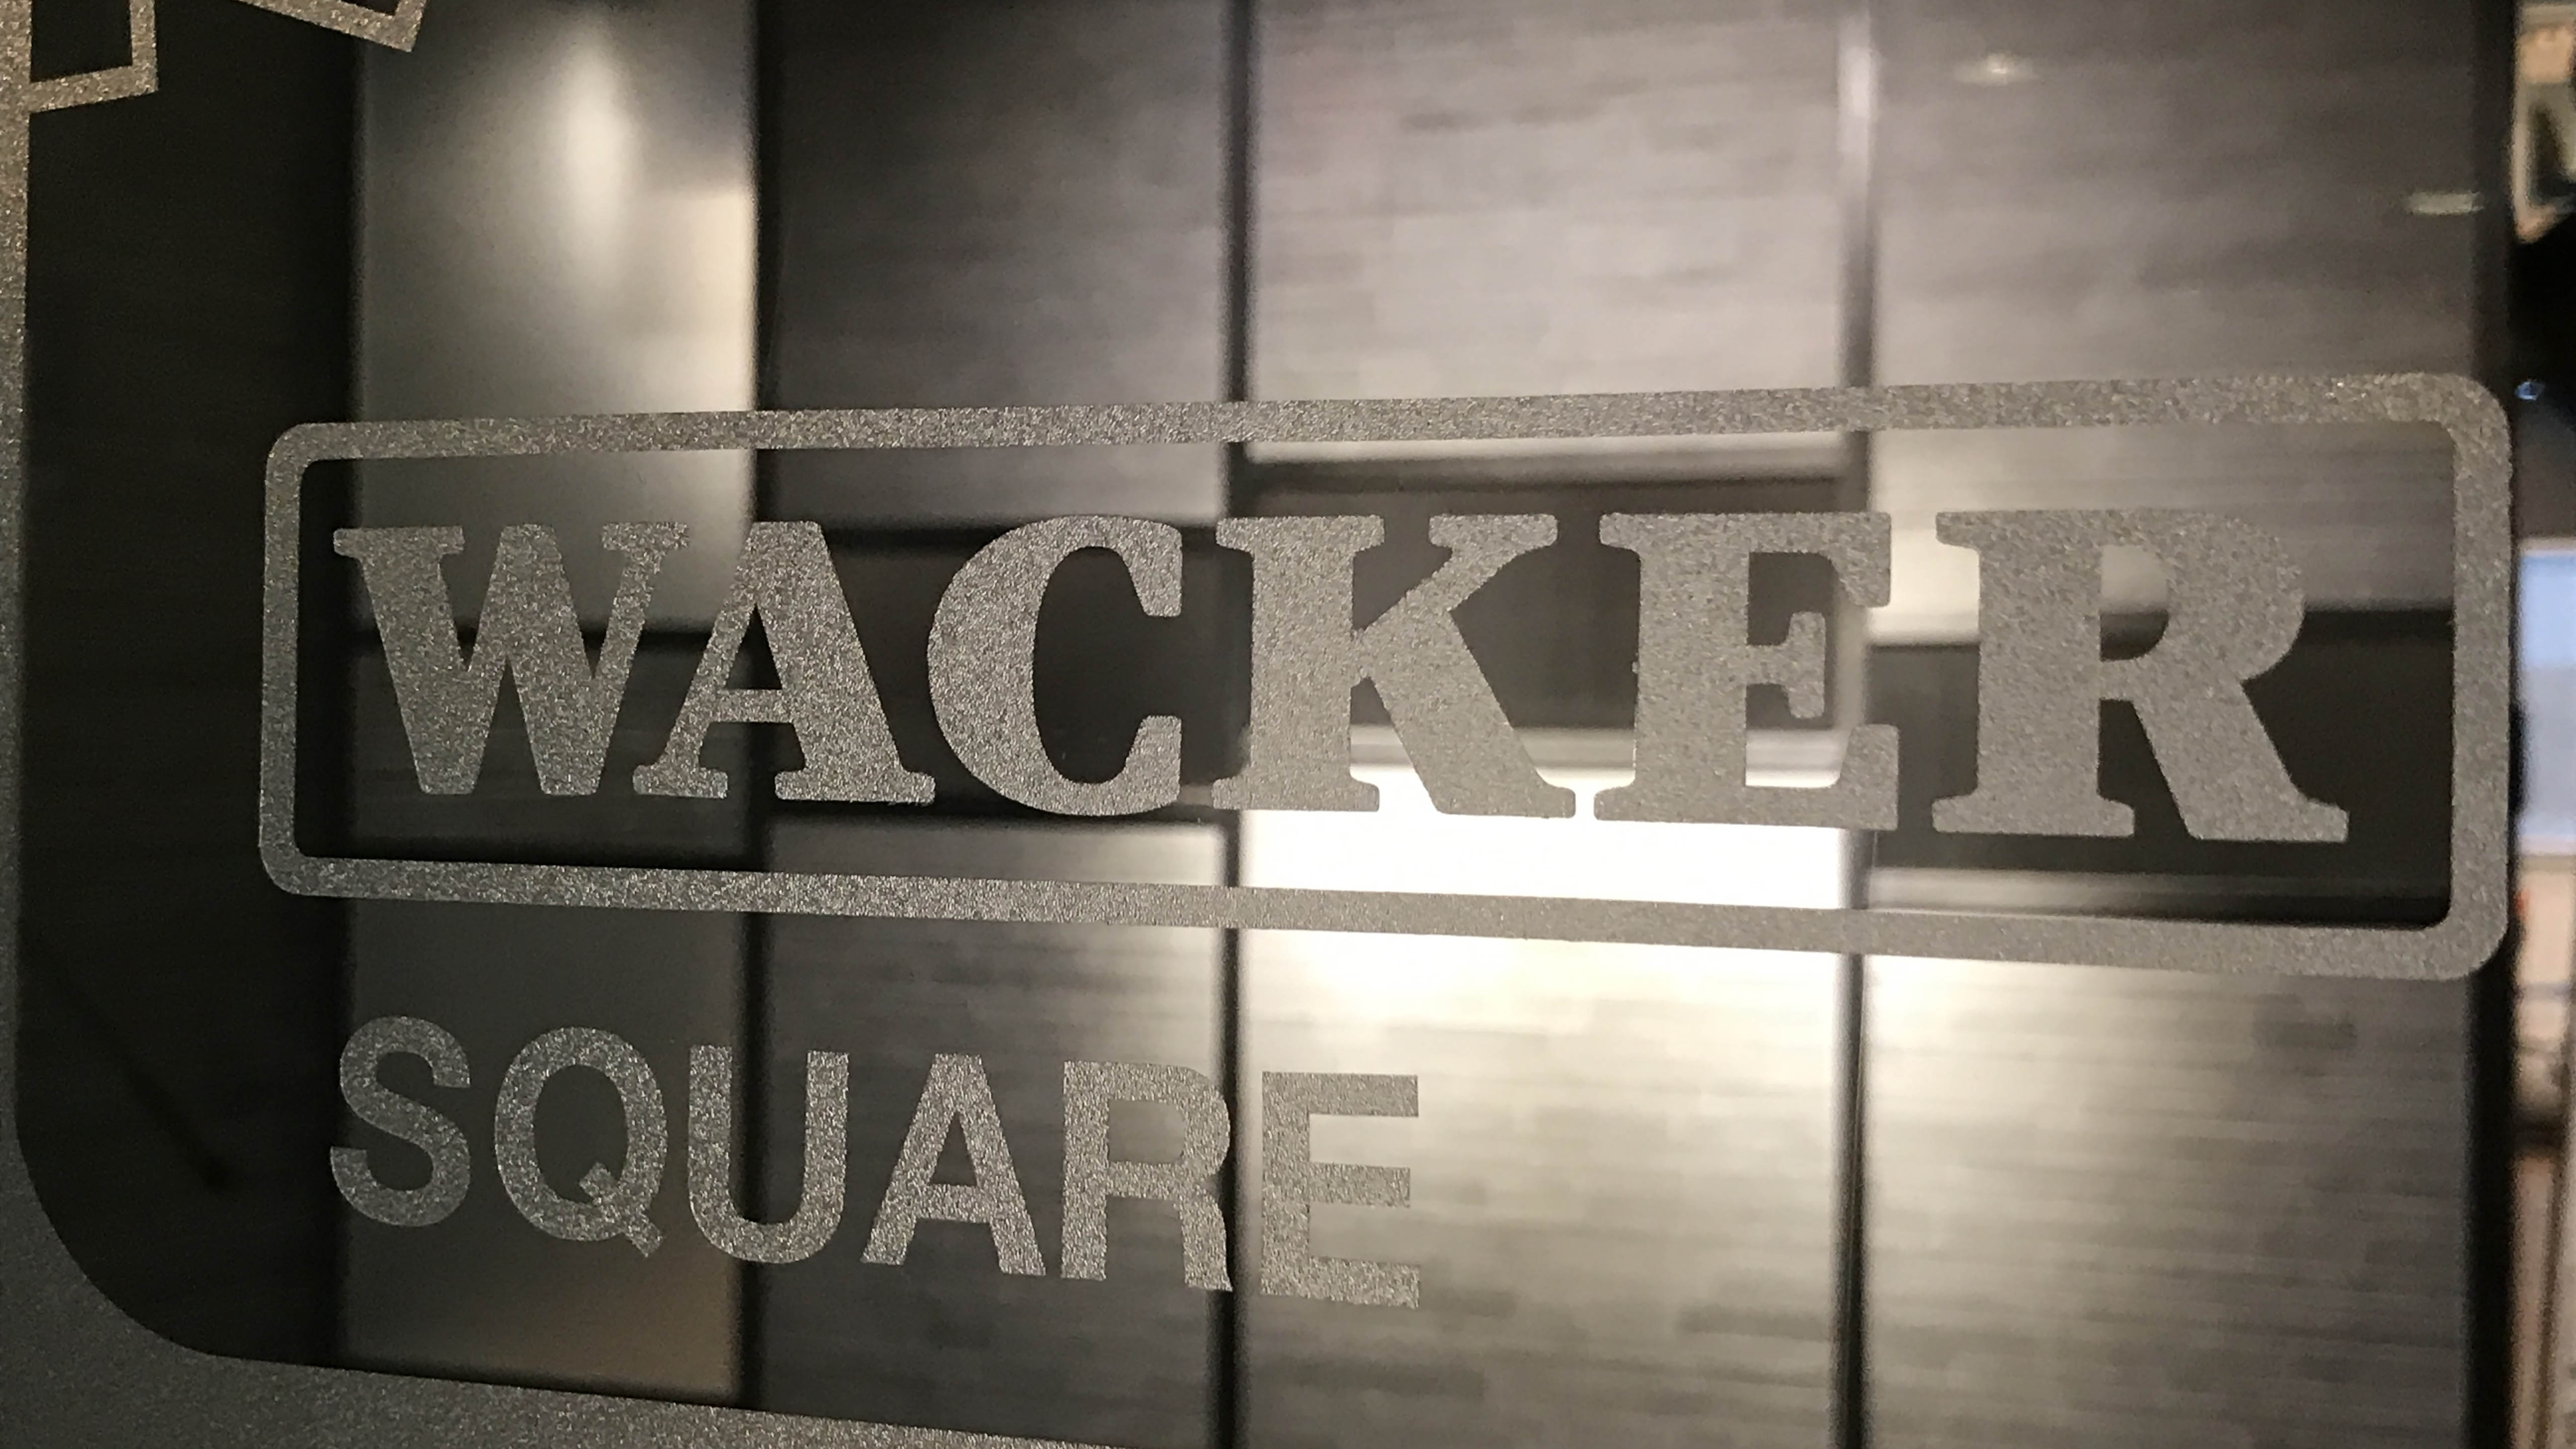 WACKER Square Room in Singapore